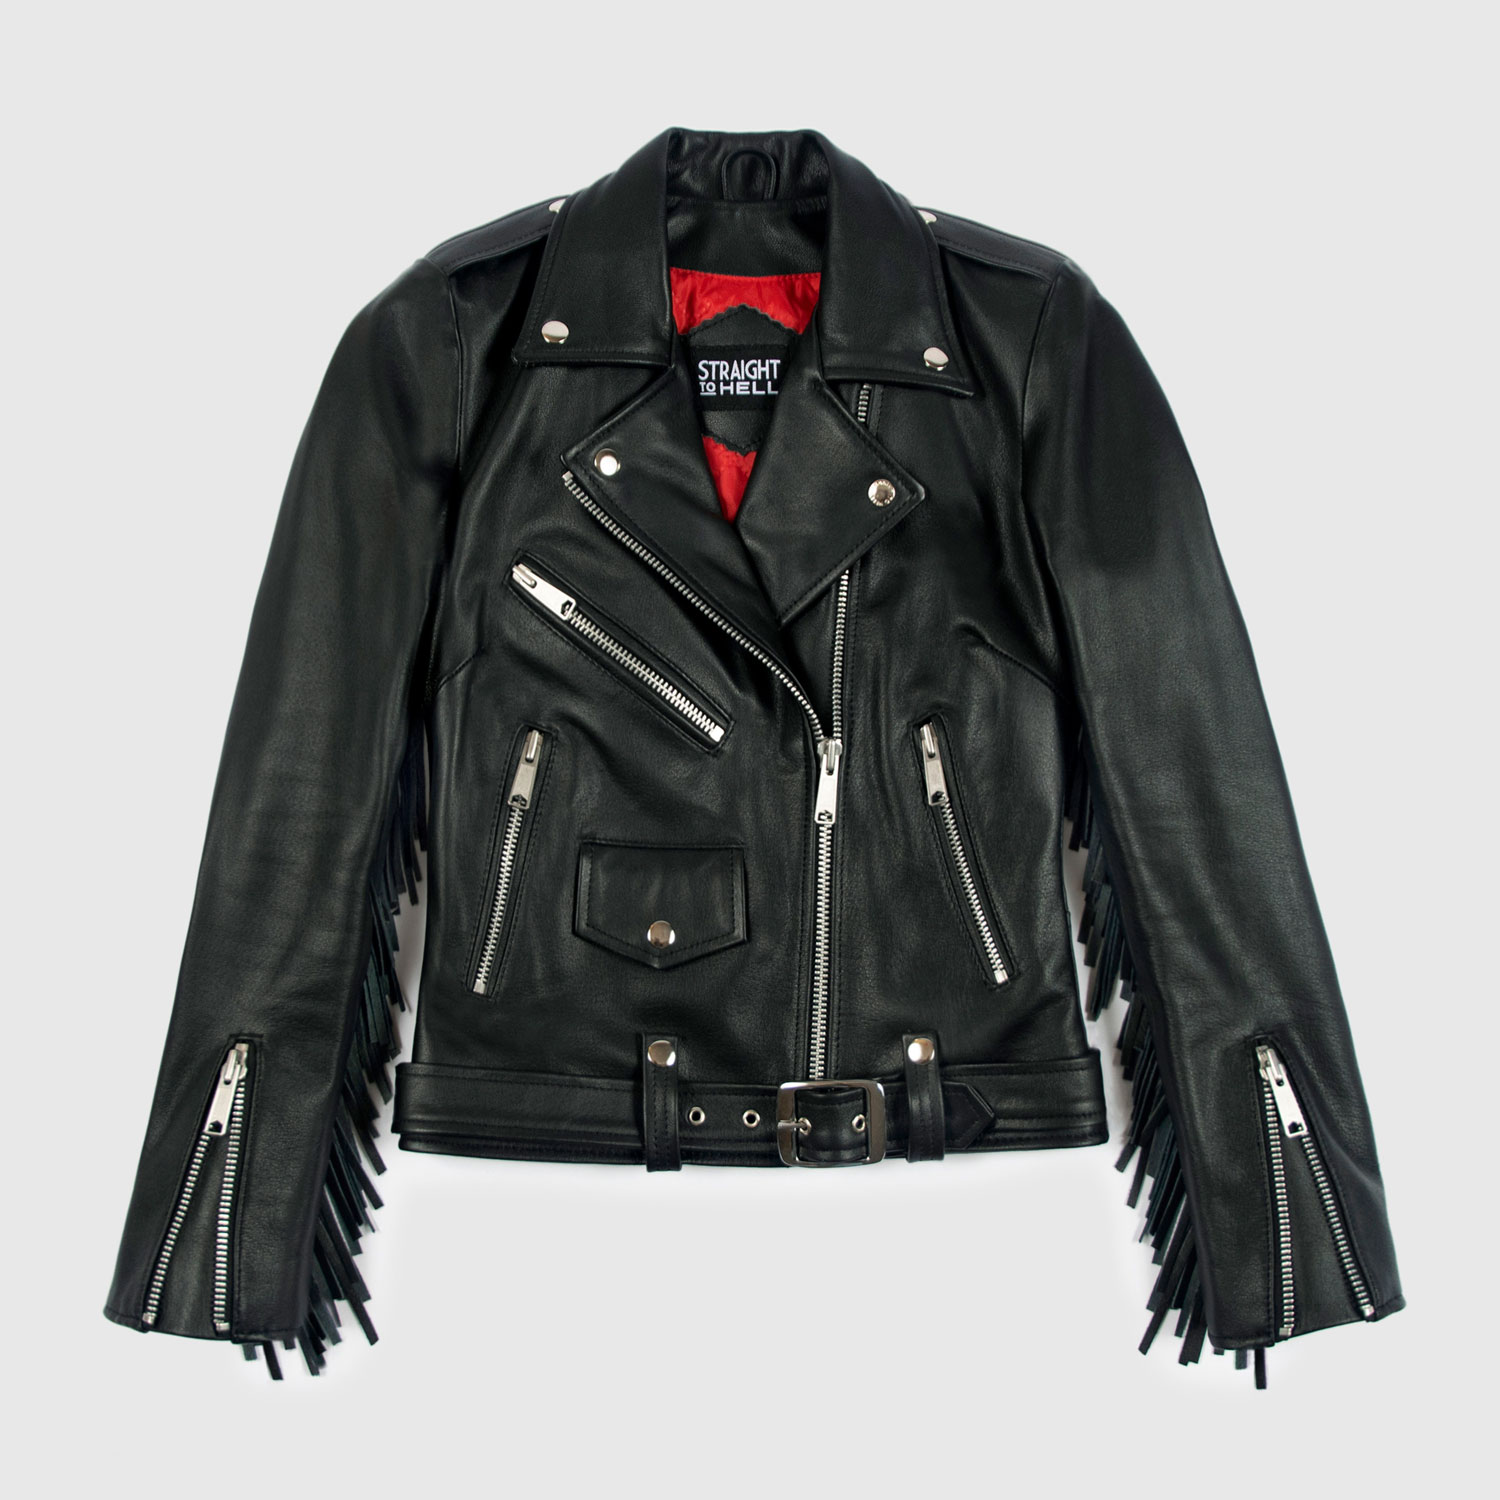 Commando Fringe - Leather Hell Straight Fringe Apparel To with Jacket 